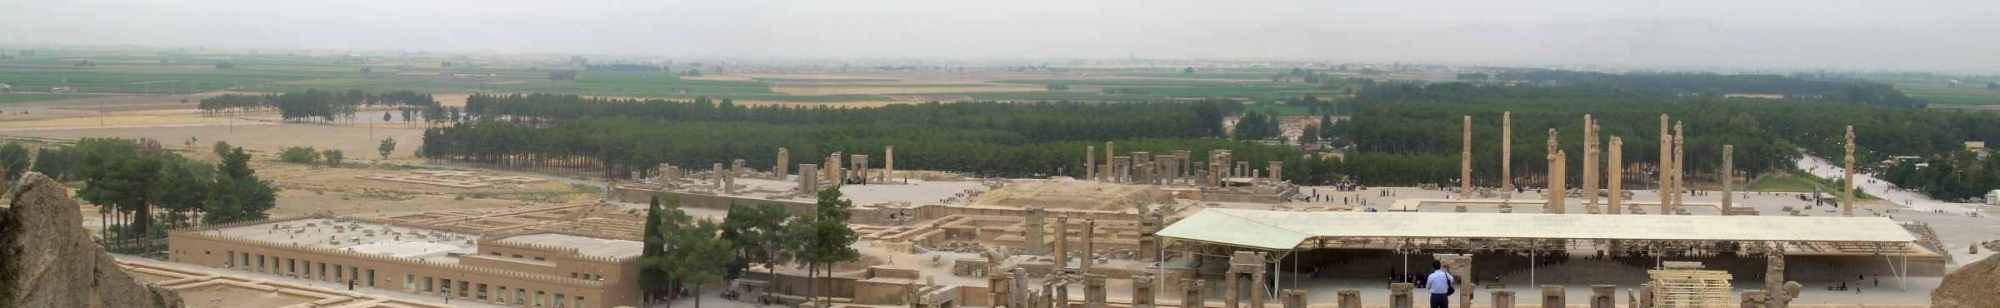 photo of Persepolis